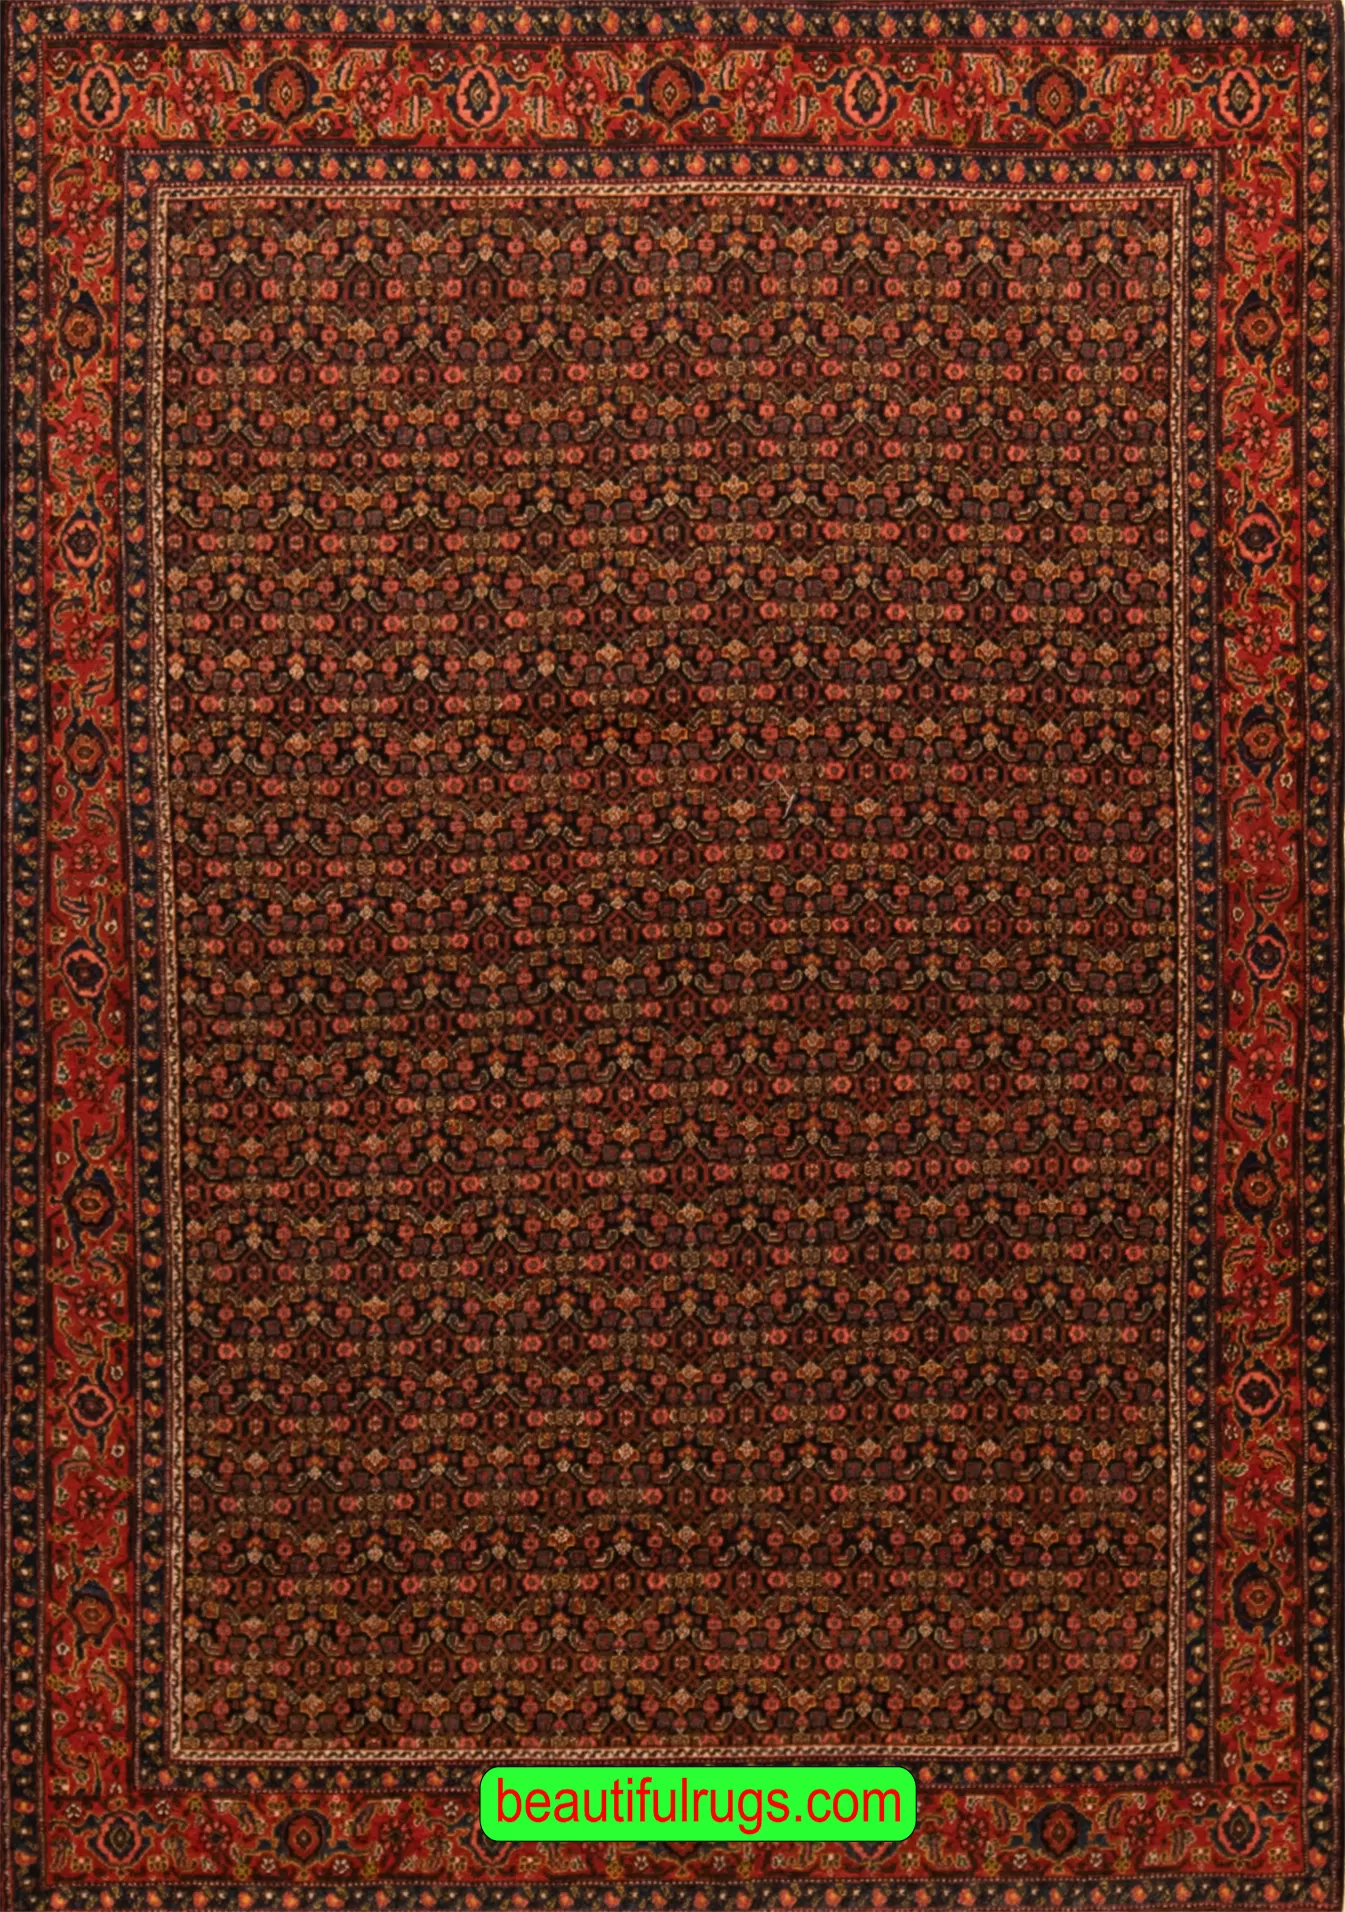 Handmade Persian Rug, Vegetable Dyed Antique Persian Senneh Rug